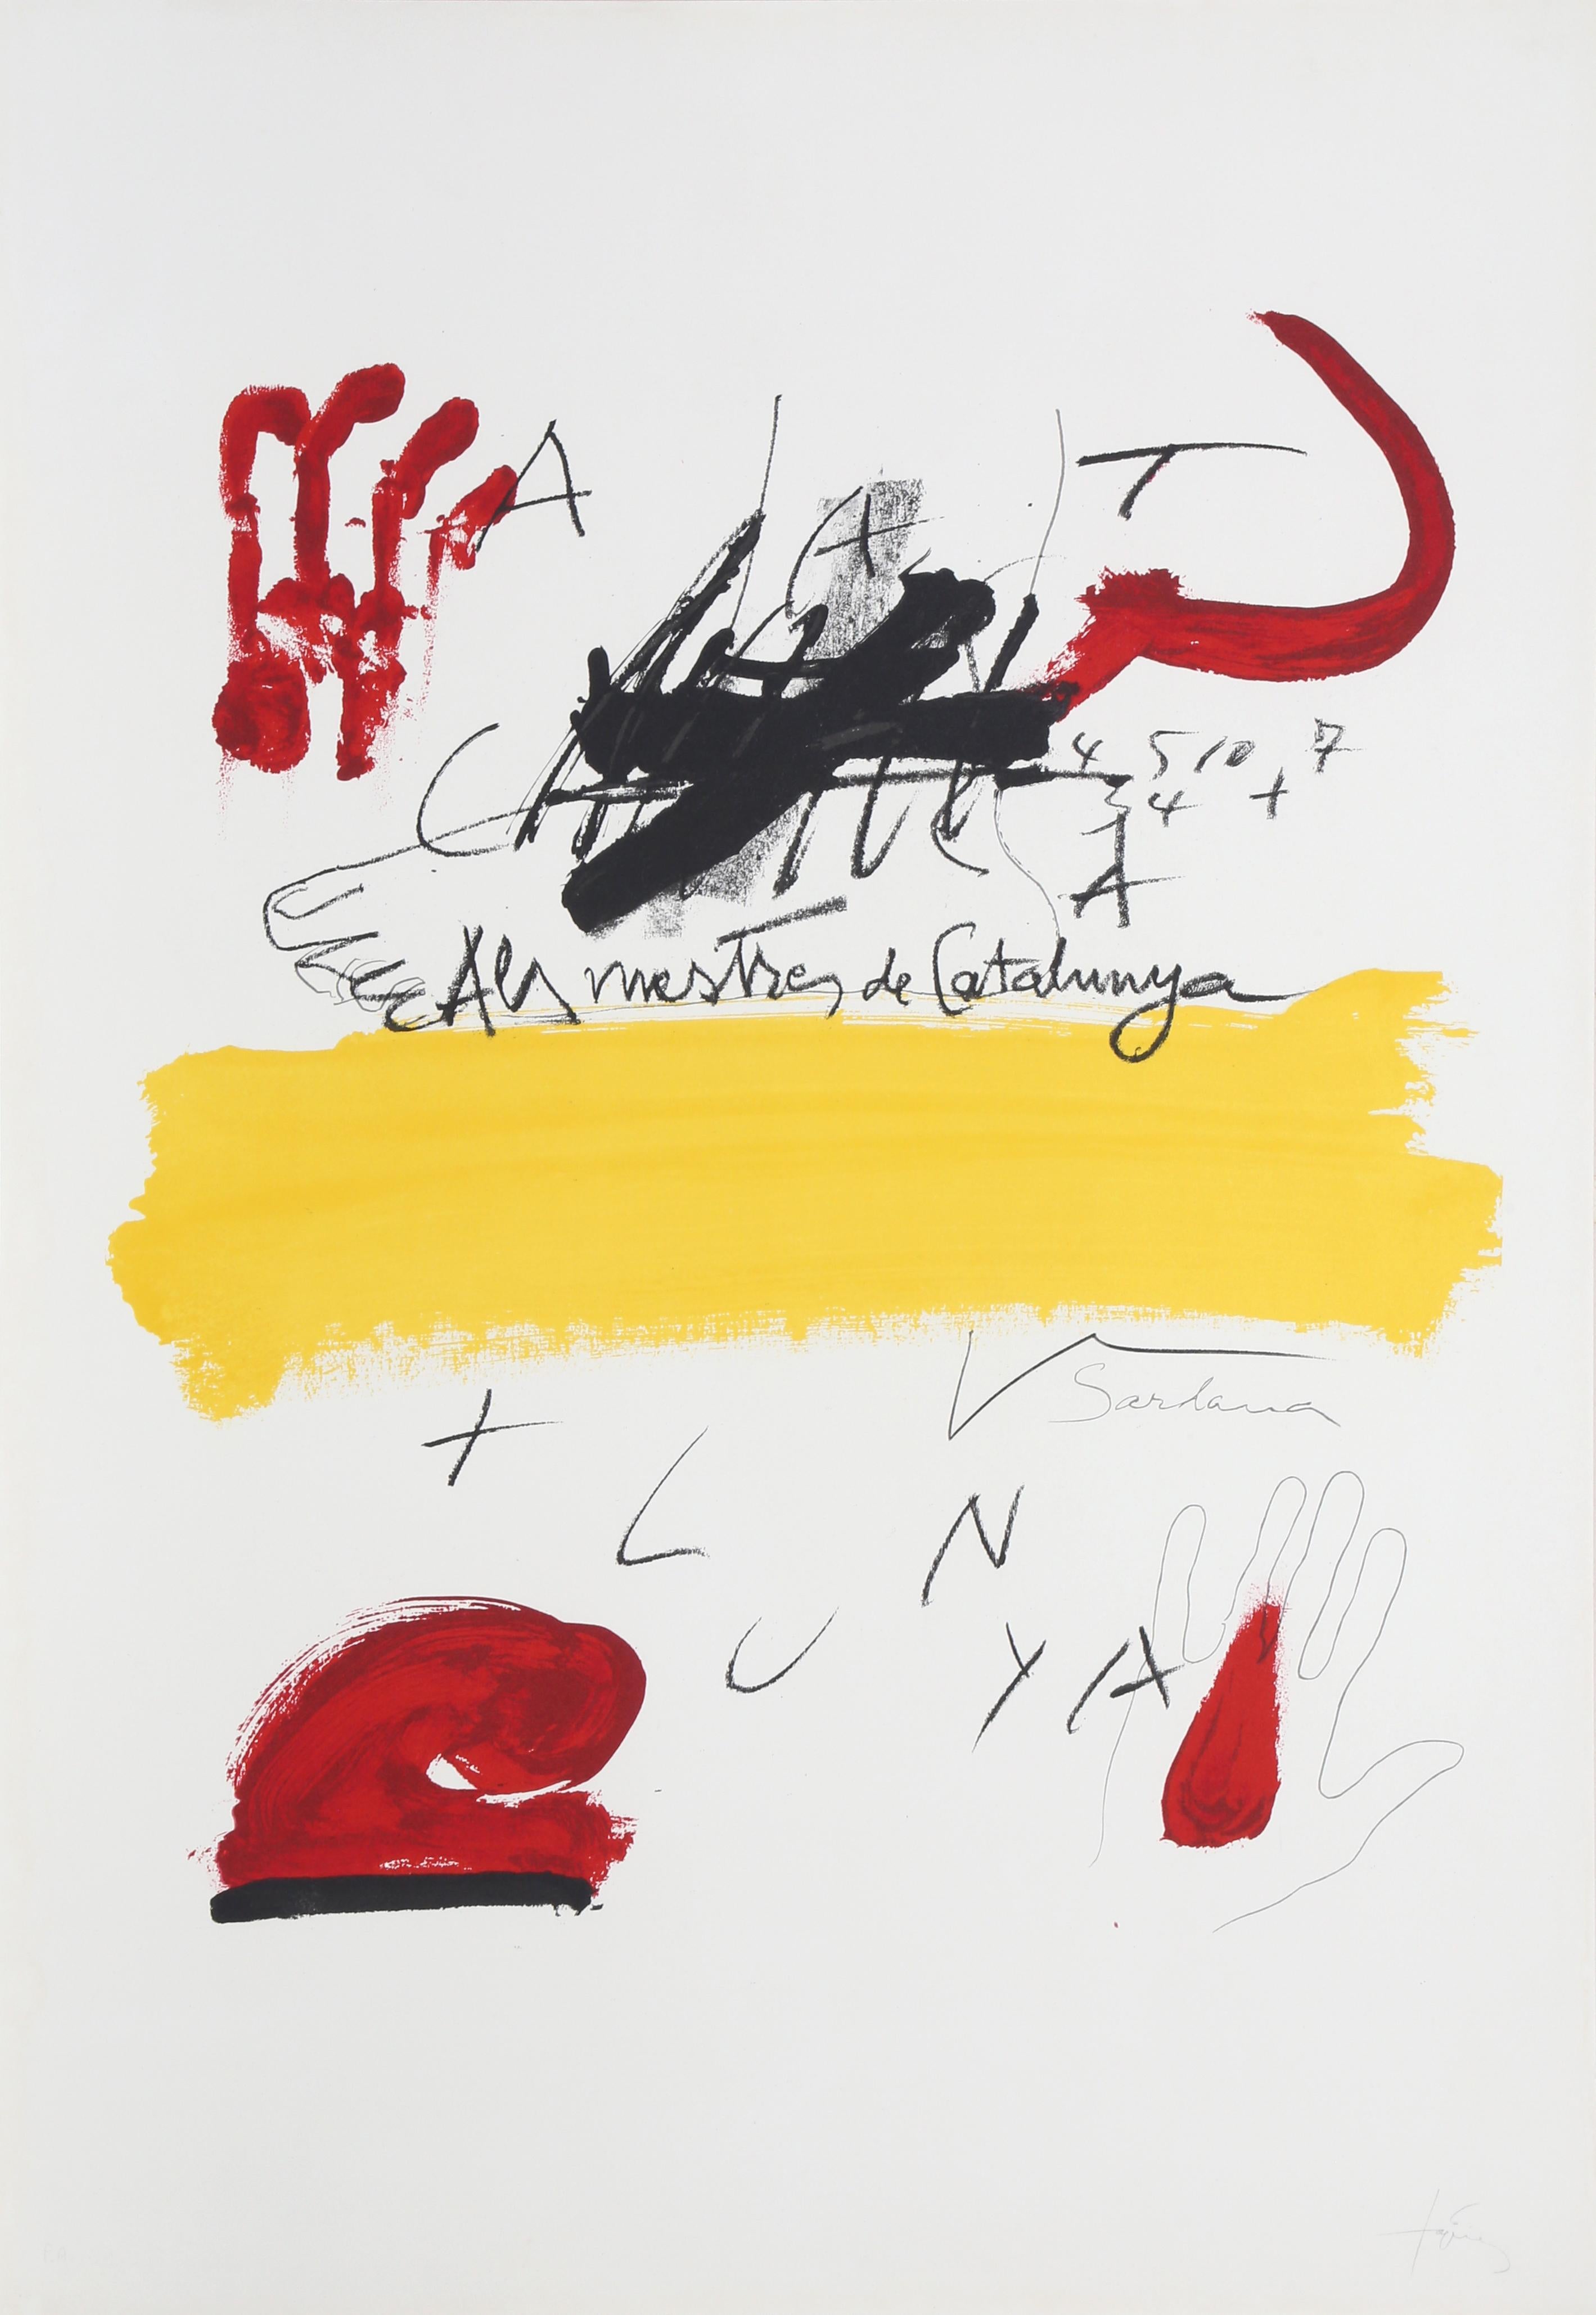 Antoni Tàpies Abstract Print – Nr. 2 aus "Als Mestres de Catalunya", Lithographie von Antoni Tapies